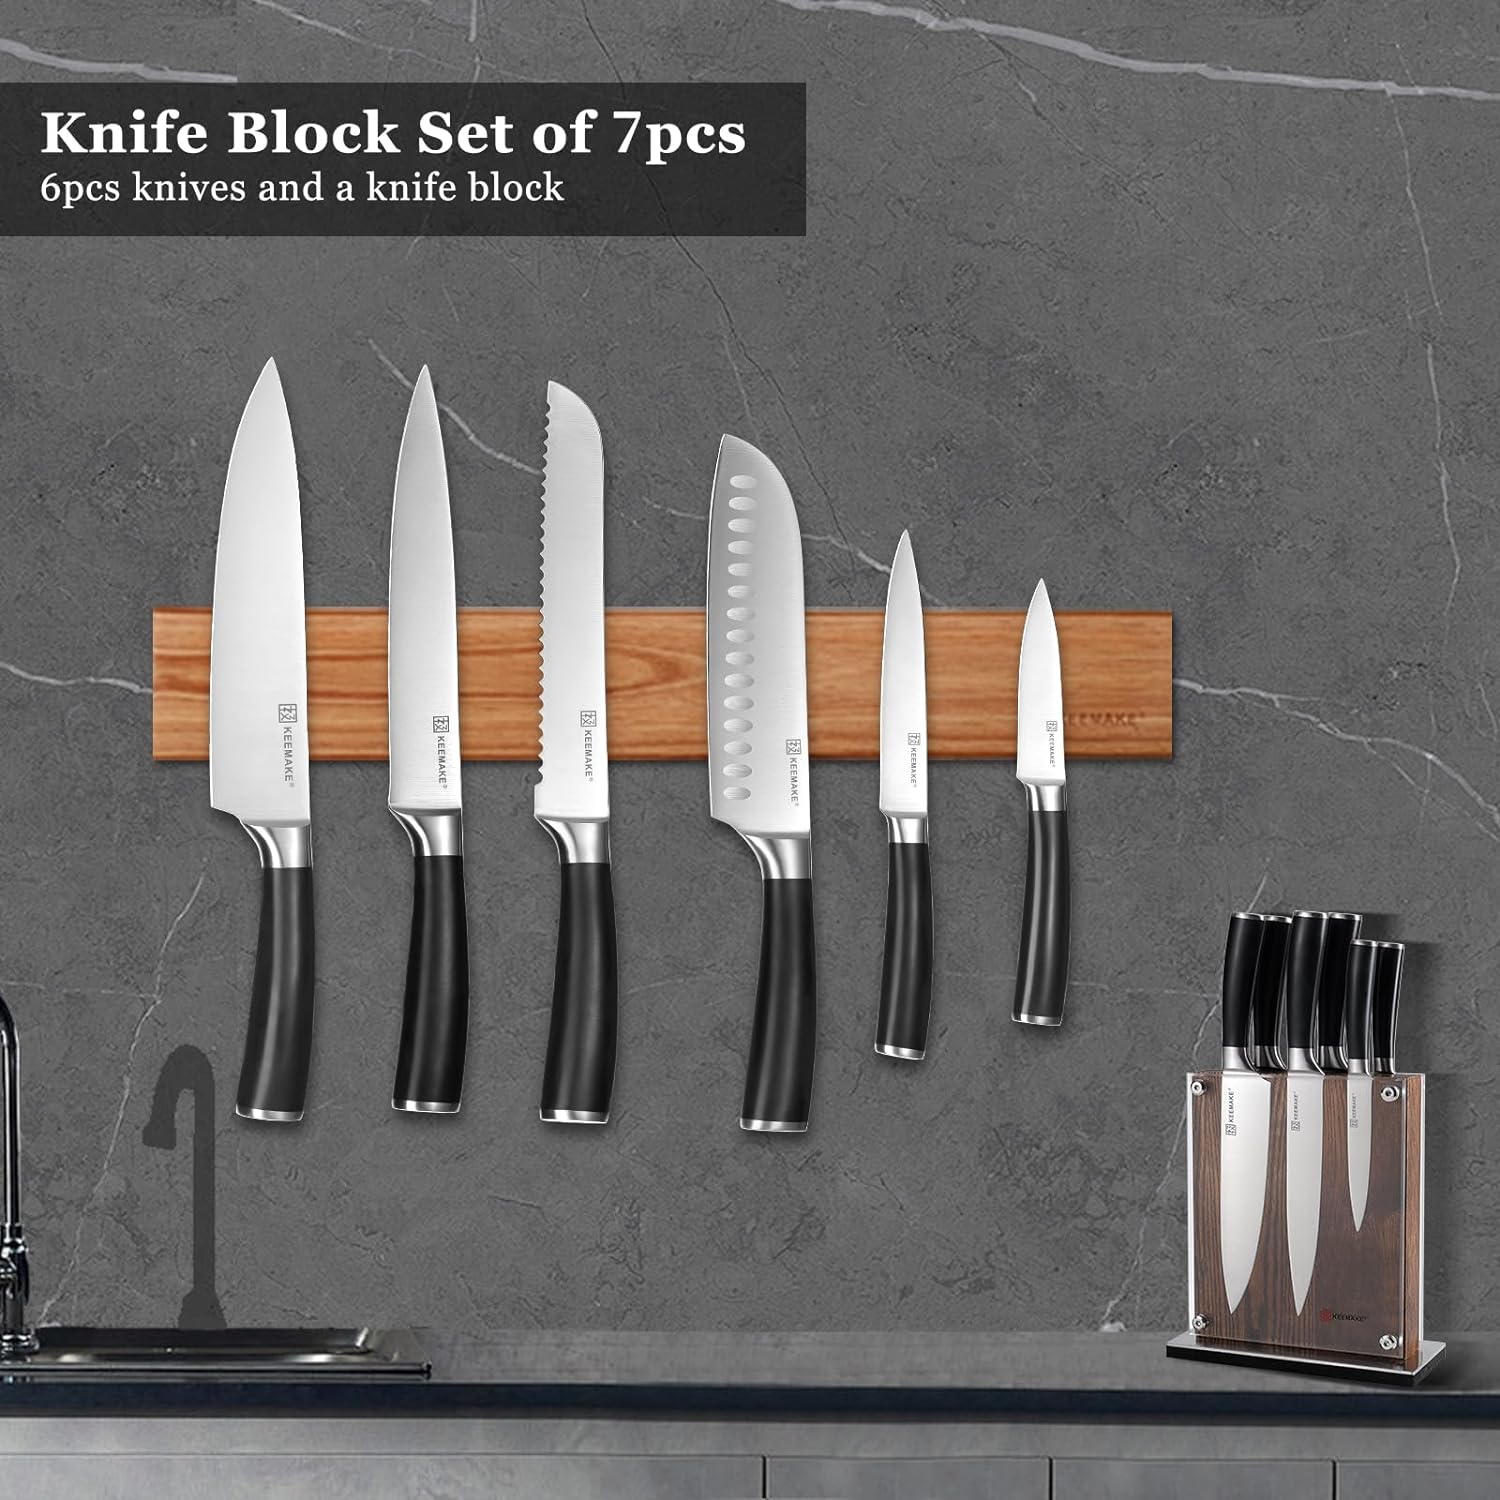 KEEMAKE Knife Block Set of 7pcs, Kitchen Knife Set with High Carbon Stainless Steel 1.4116 Blade Knife Sets